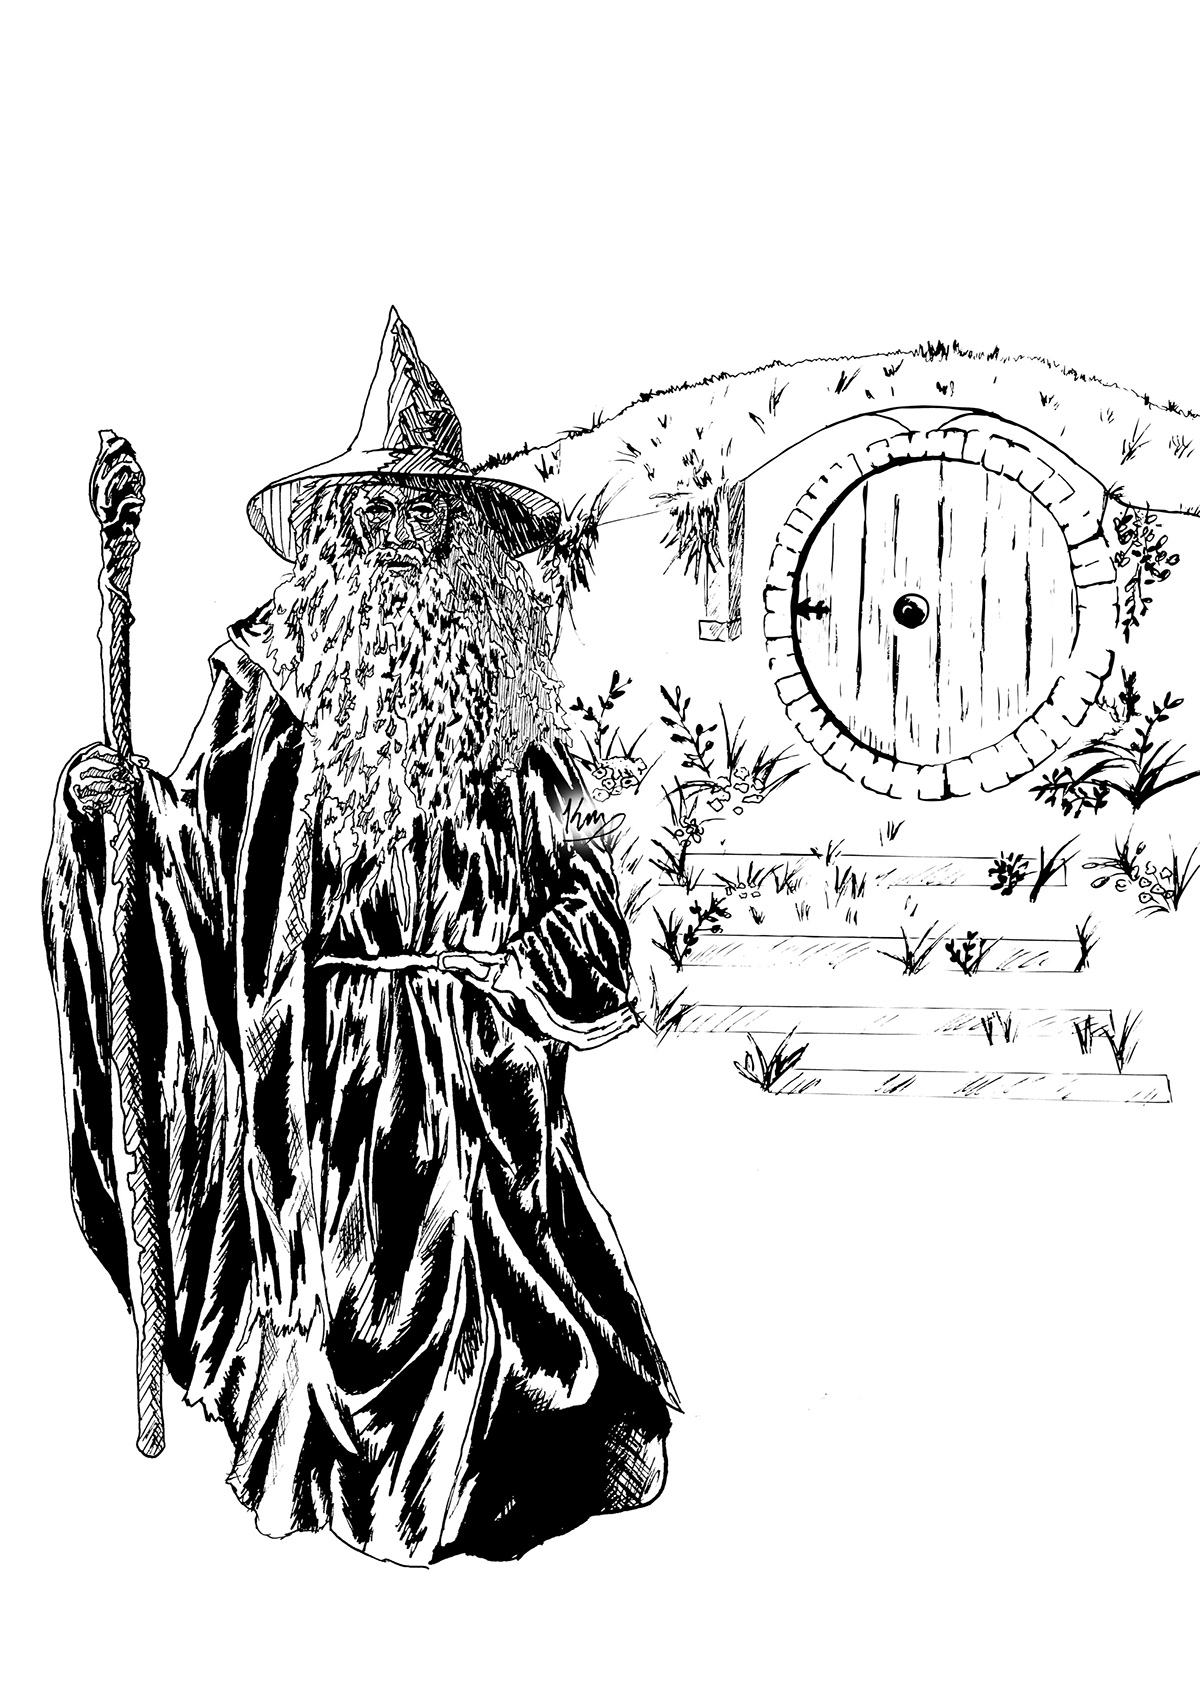 gandalf ian rings lord Lord of the hobbit jackson Shire wizard smaug dragon